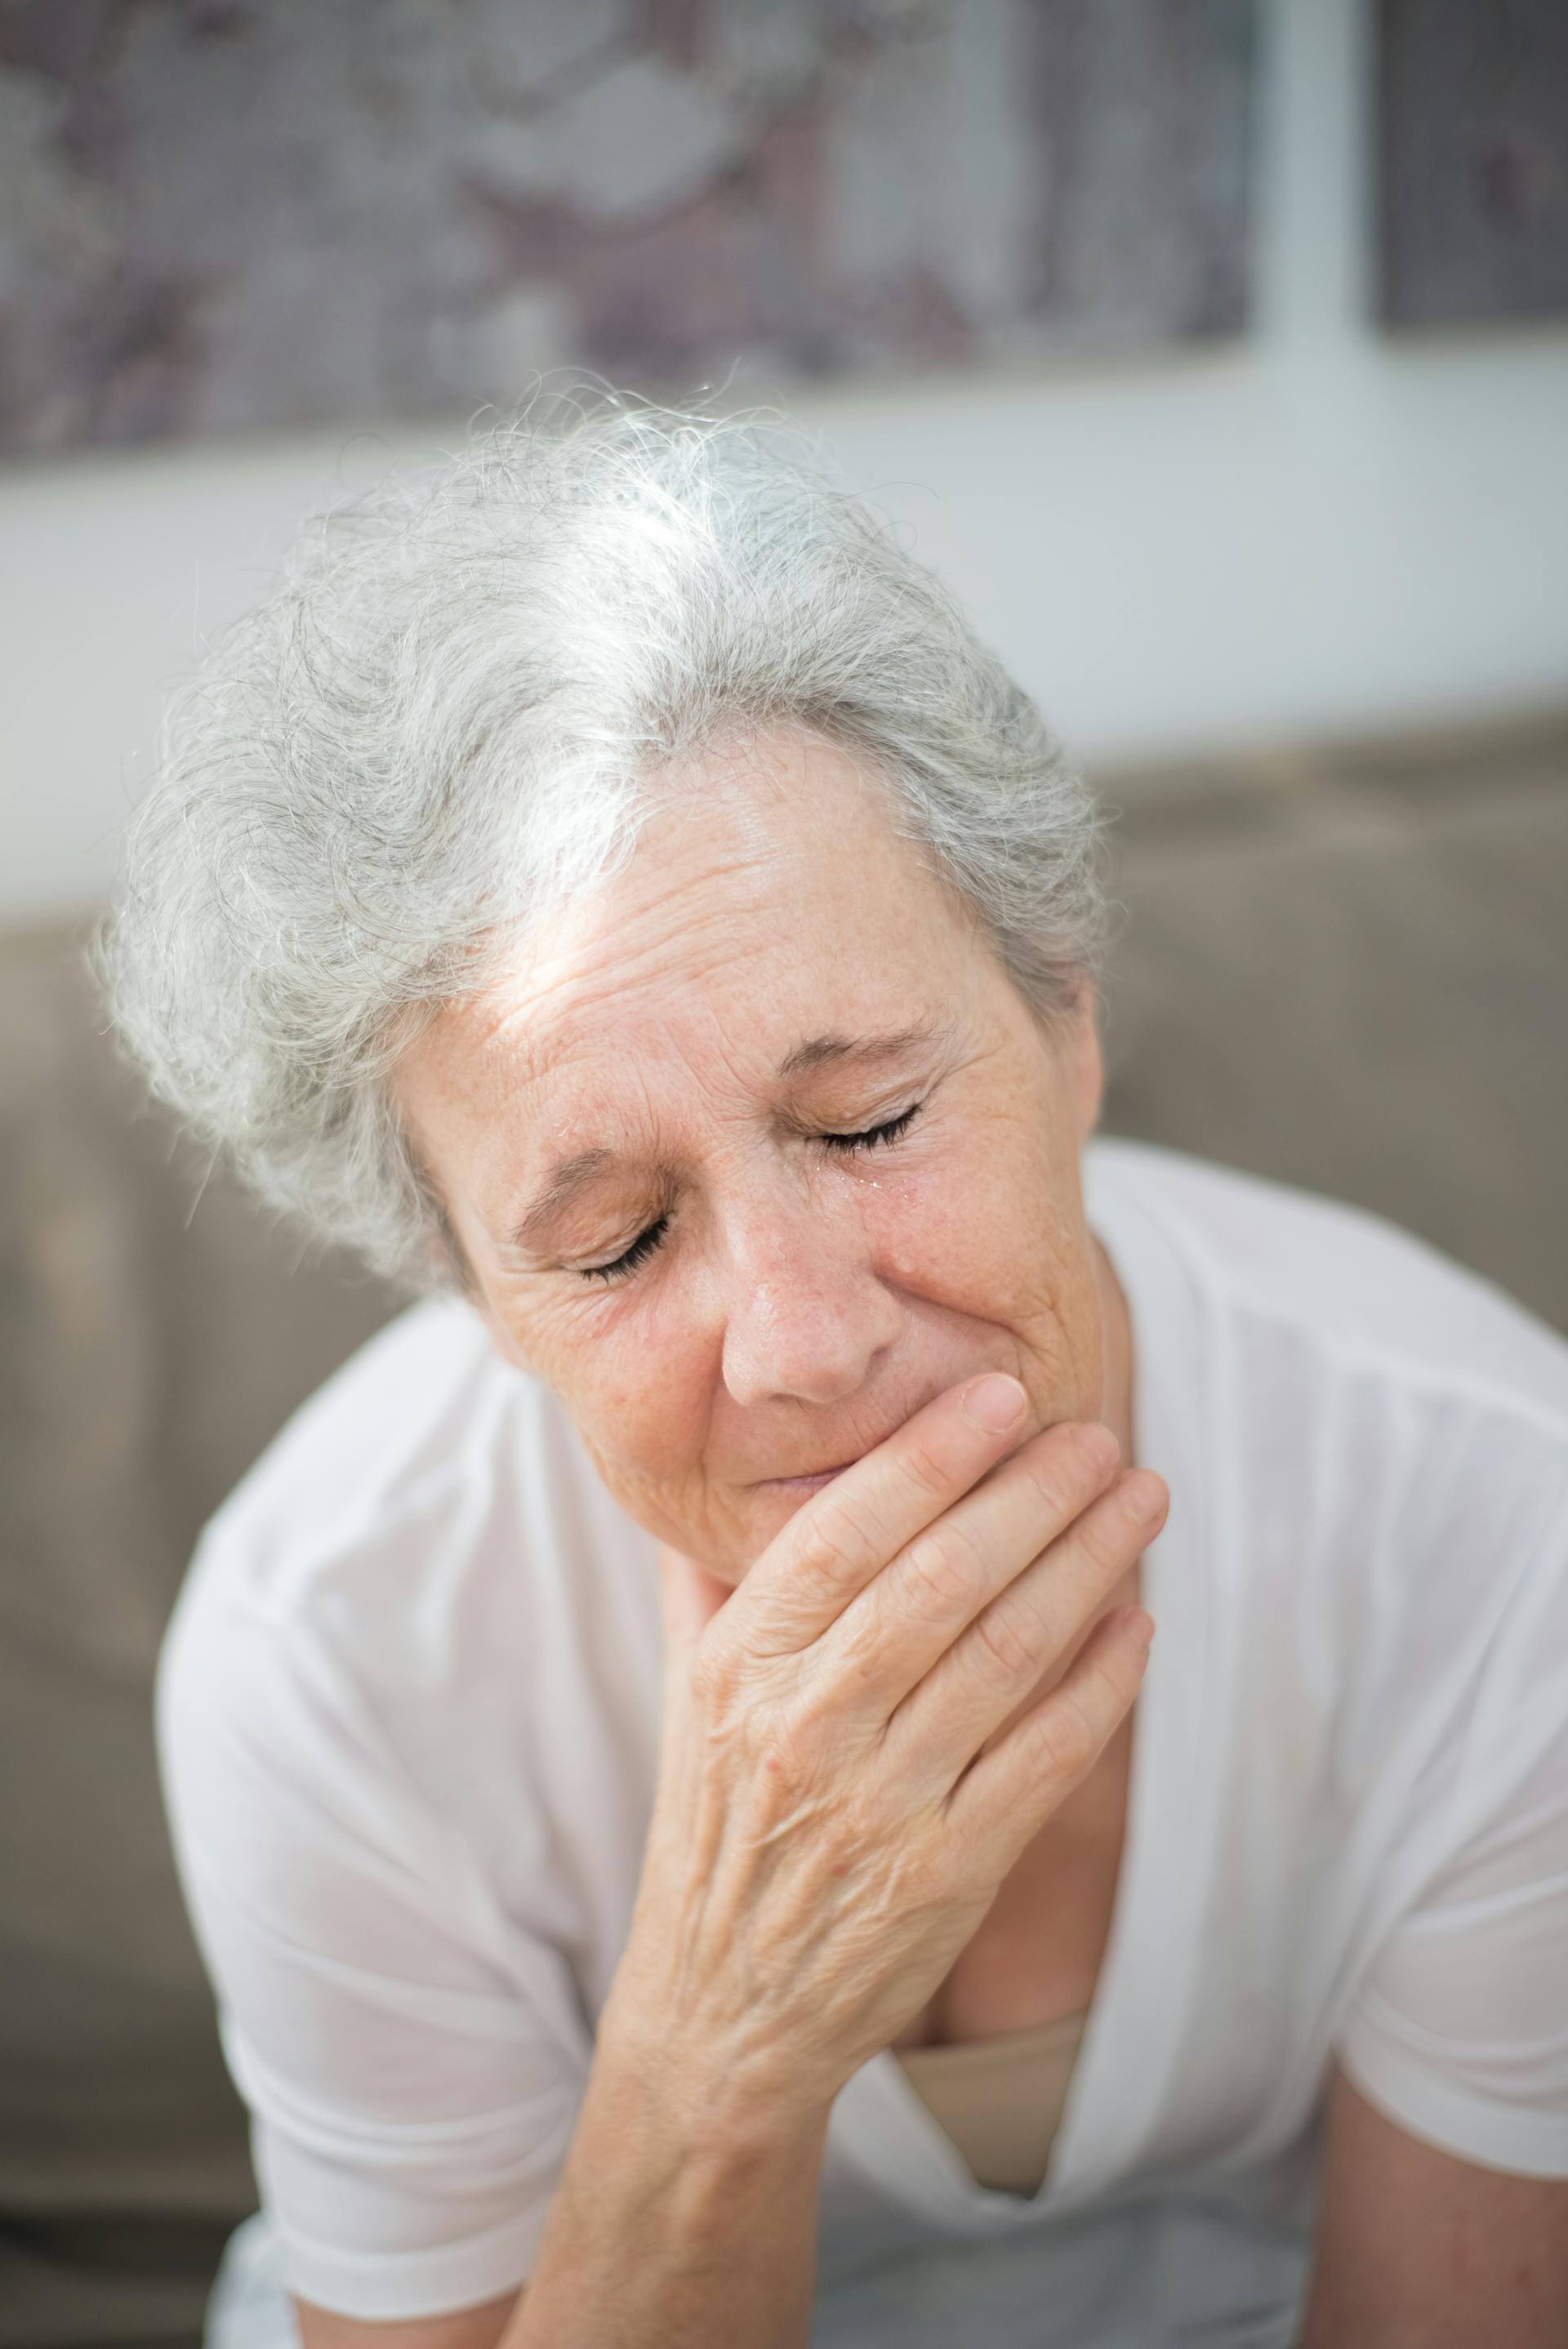 Elderly woman crying | Source: Pexels